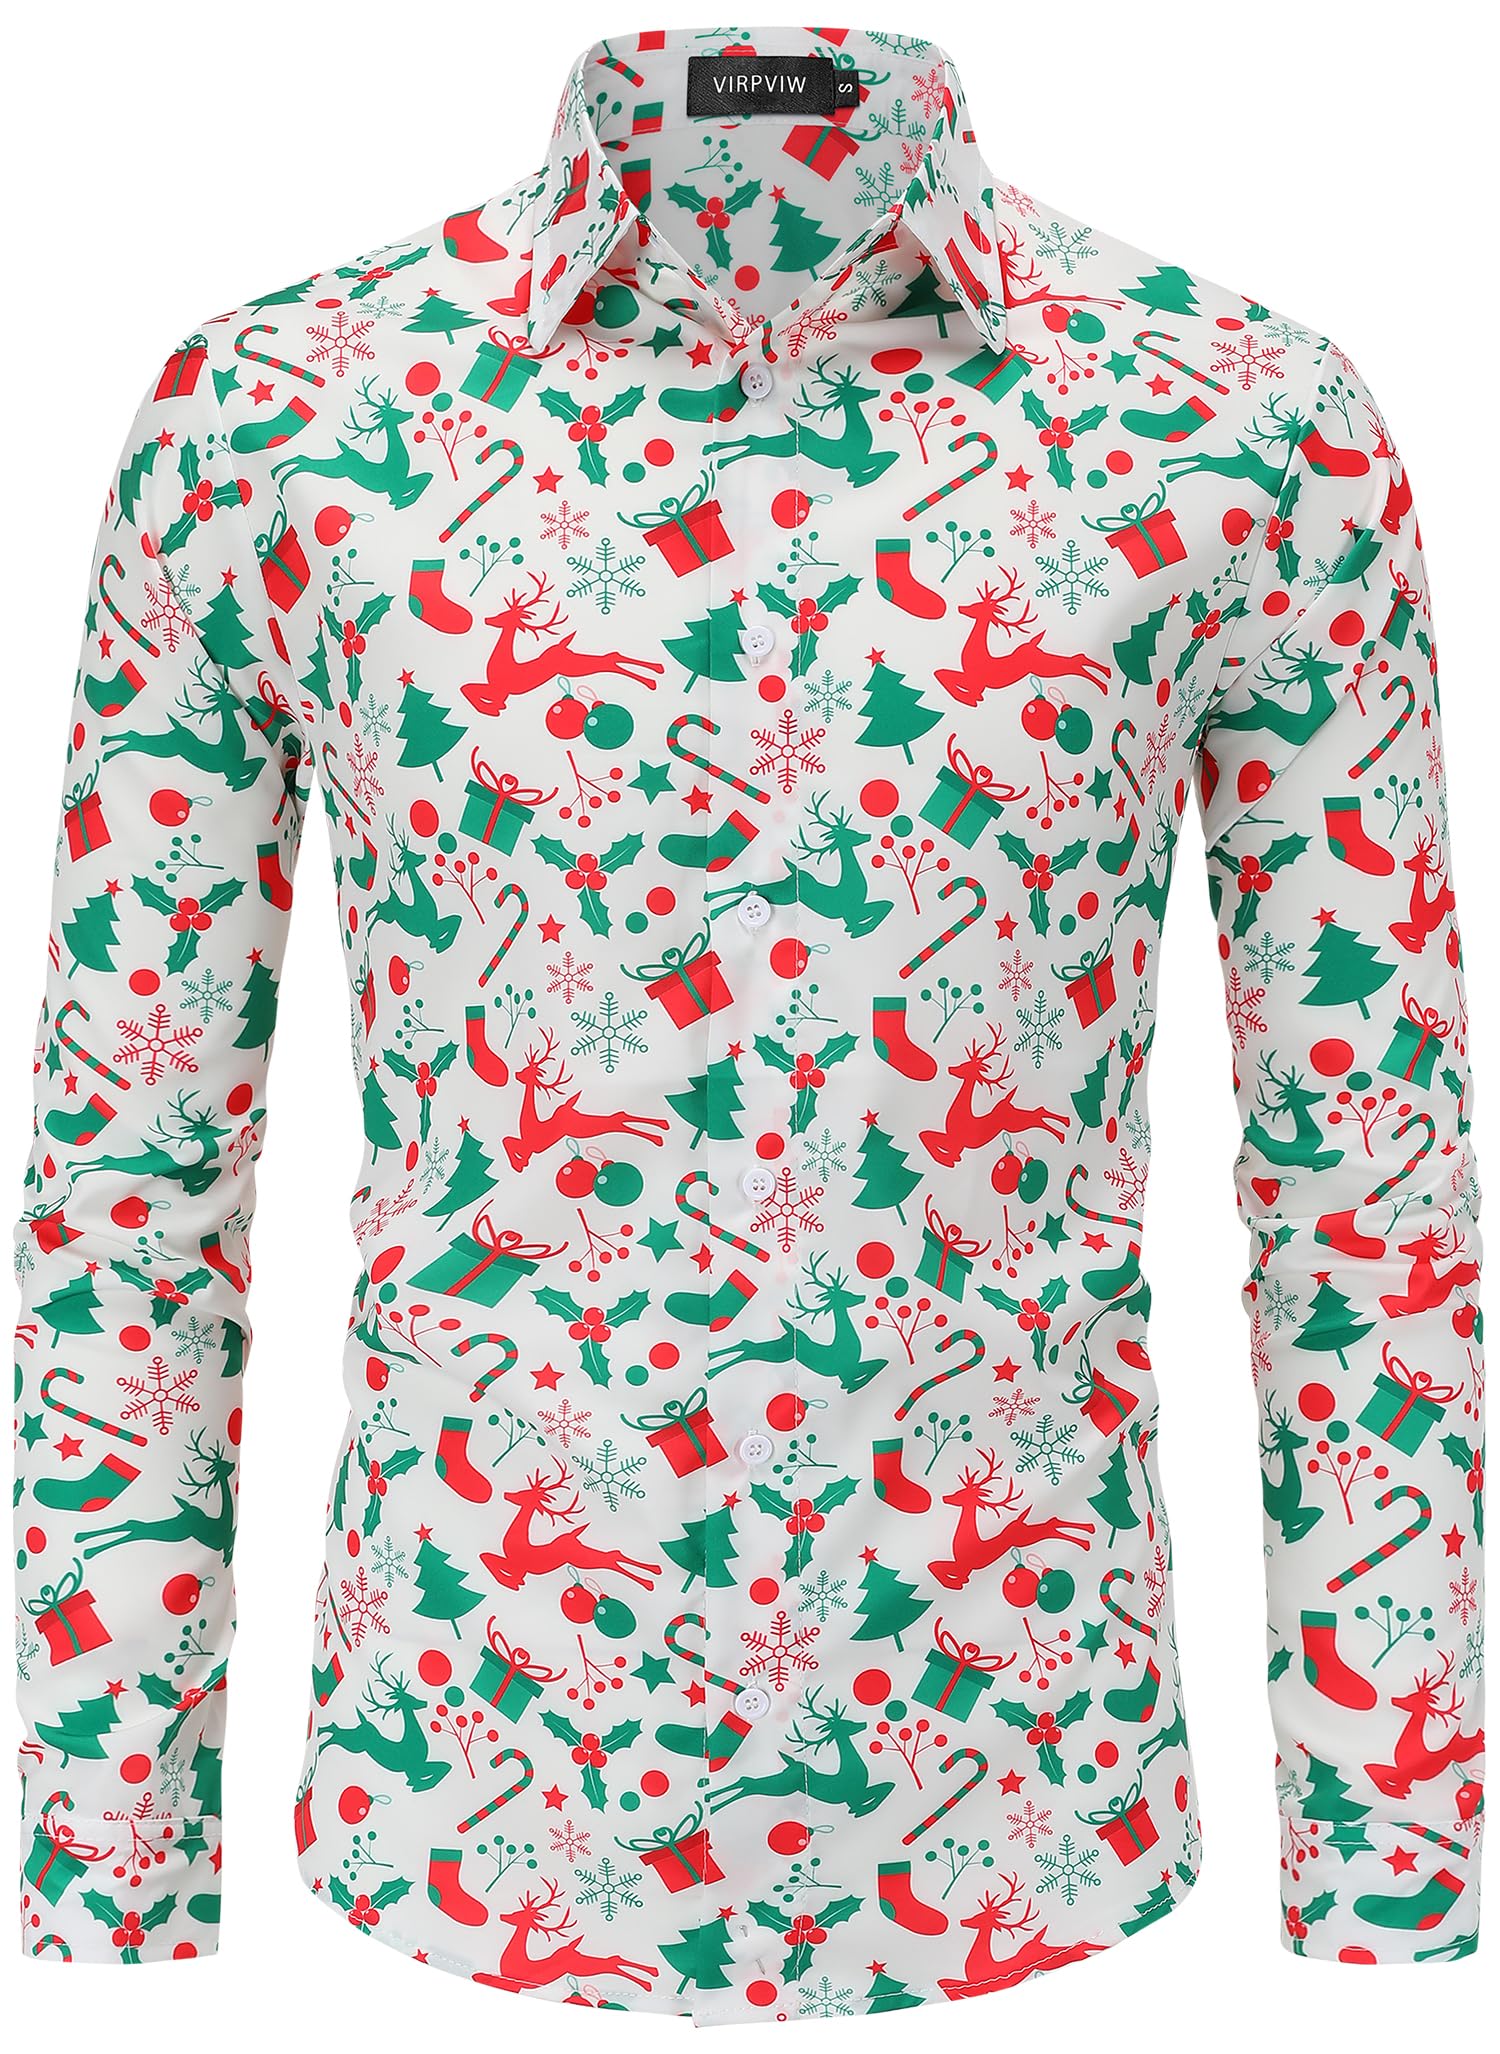 (Large) Virpviw Men's Christmas Shirt Santa Claus Long Sleeve Button Down Shirts Ugly Christmas Shirts for Men